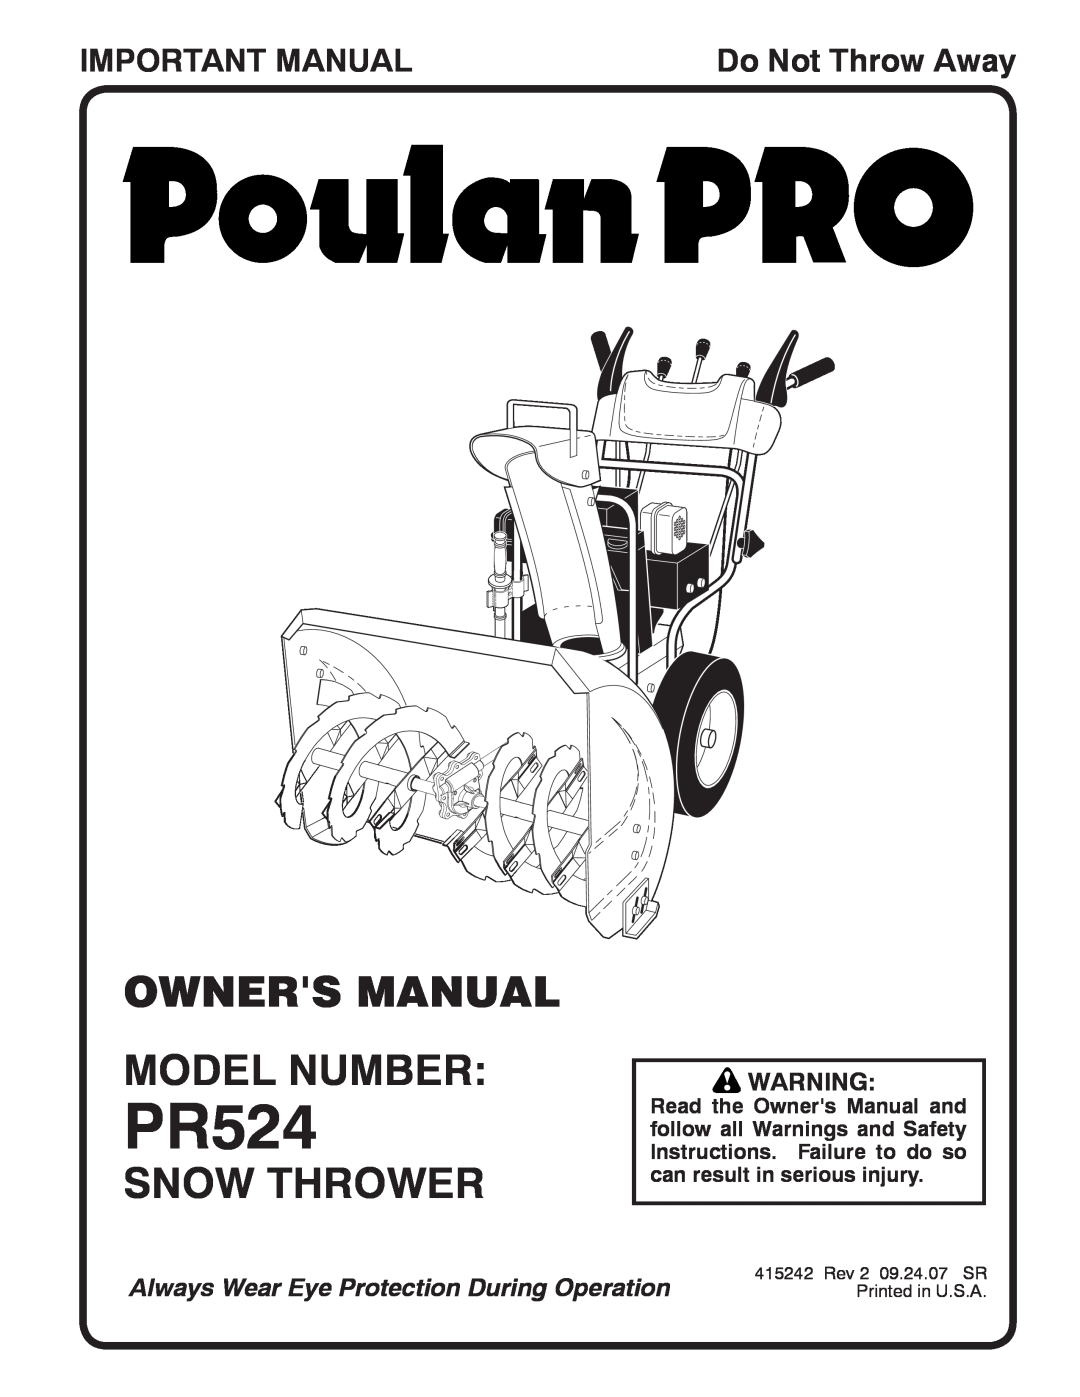 Poulan 415242 owner manual Snow Thrower, Important Manual, PR524, Do Not Throw Away 